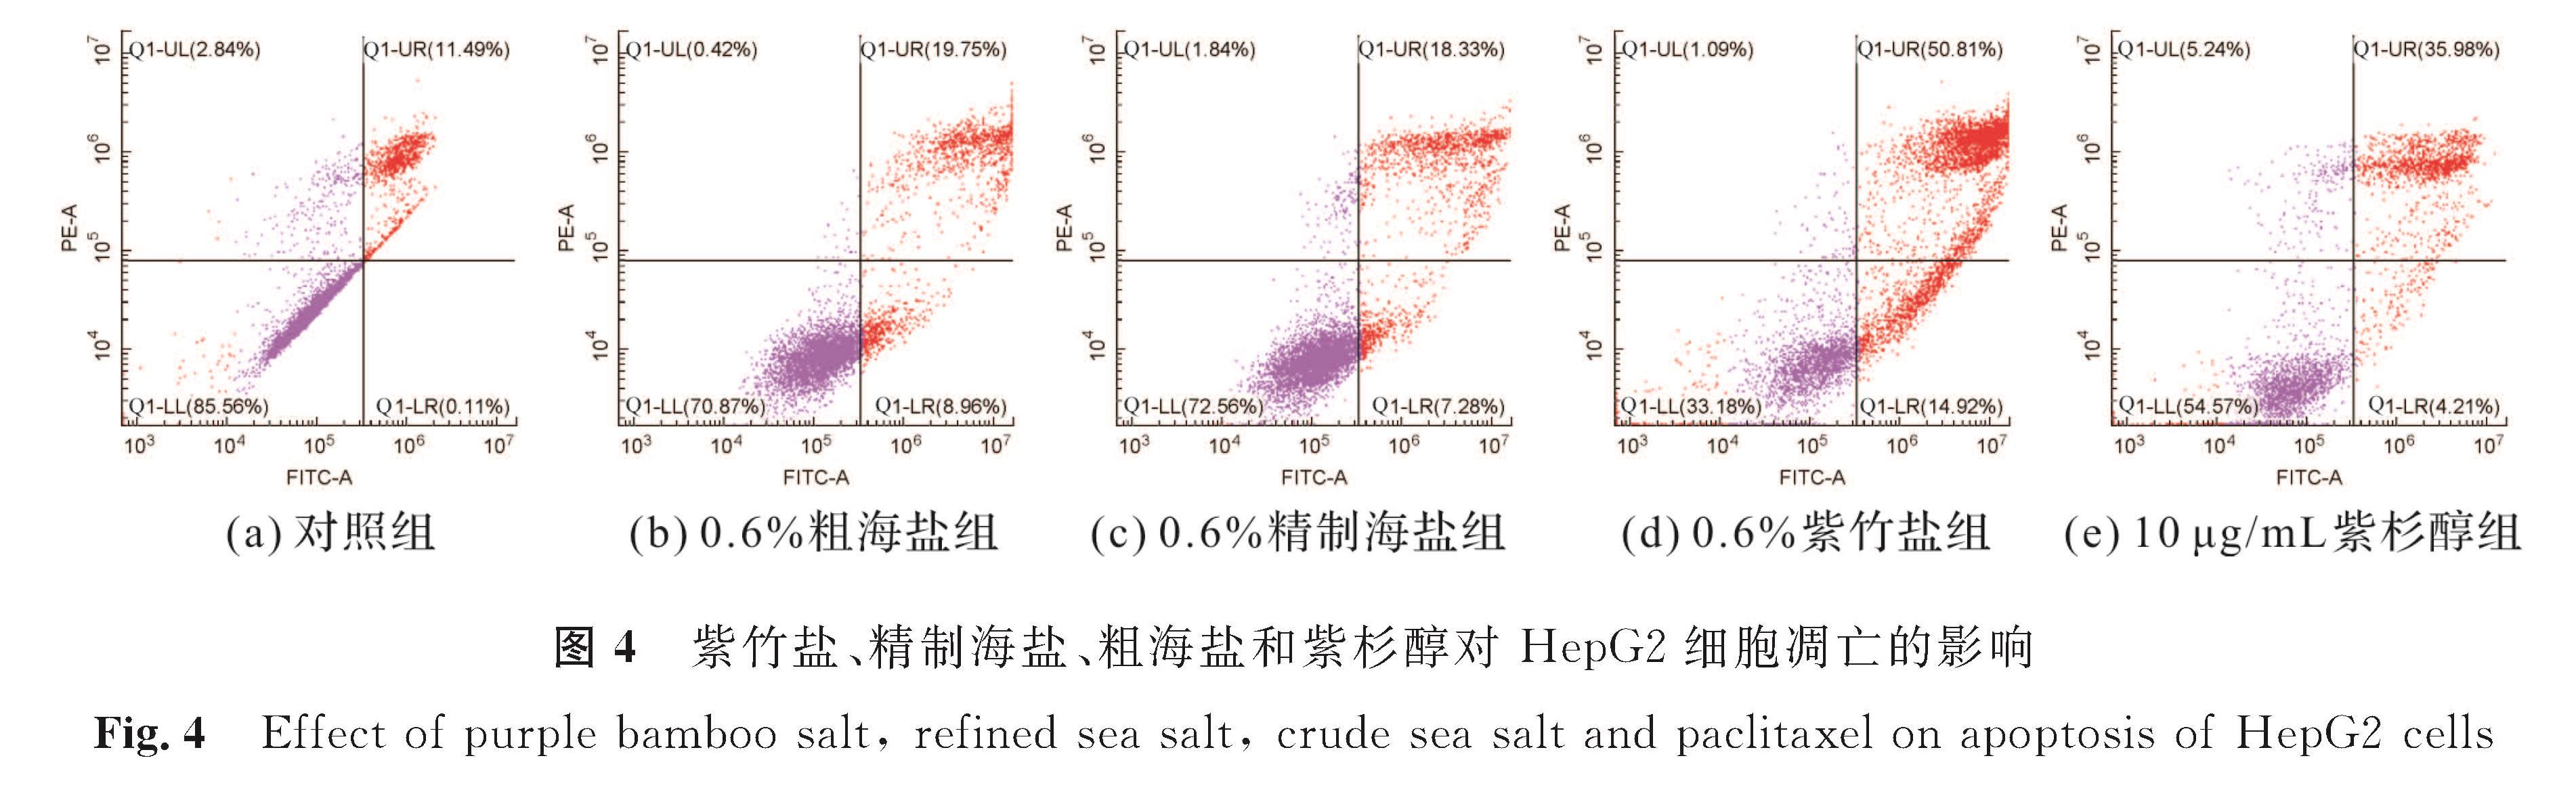 图4 紫竹盐、精制海盐、粗海盐和紫杉醇对HepG2细胞凋亡的影响<br/>Fig.4 Effect of purple bamboo salt, refined sea salt, crude sea salt and paclitaxel on apoptosis of HepG2 cells